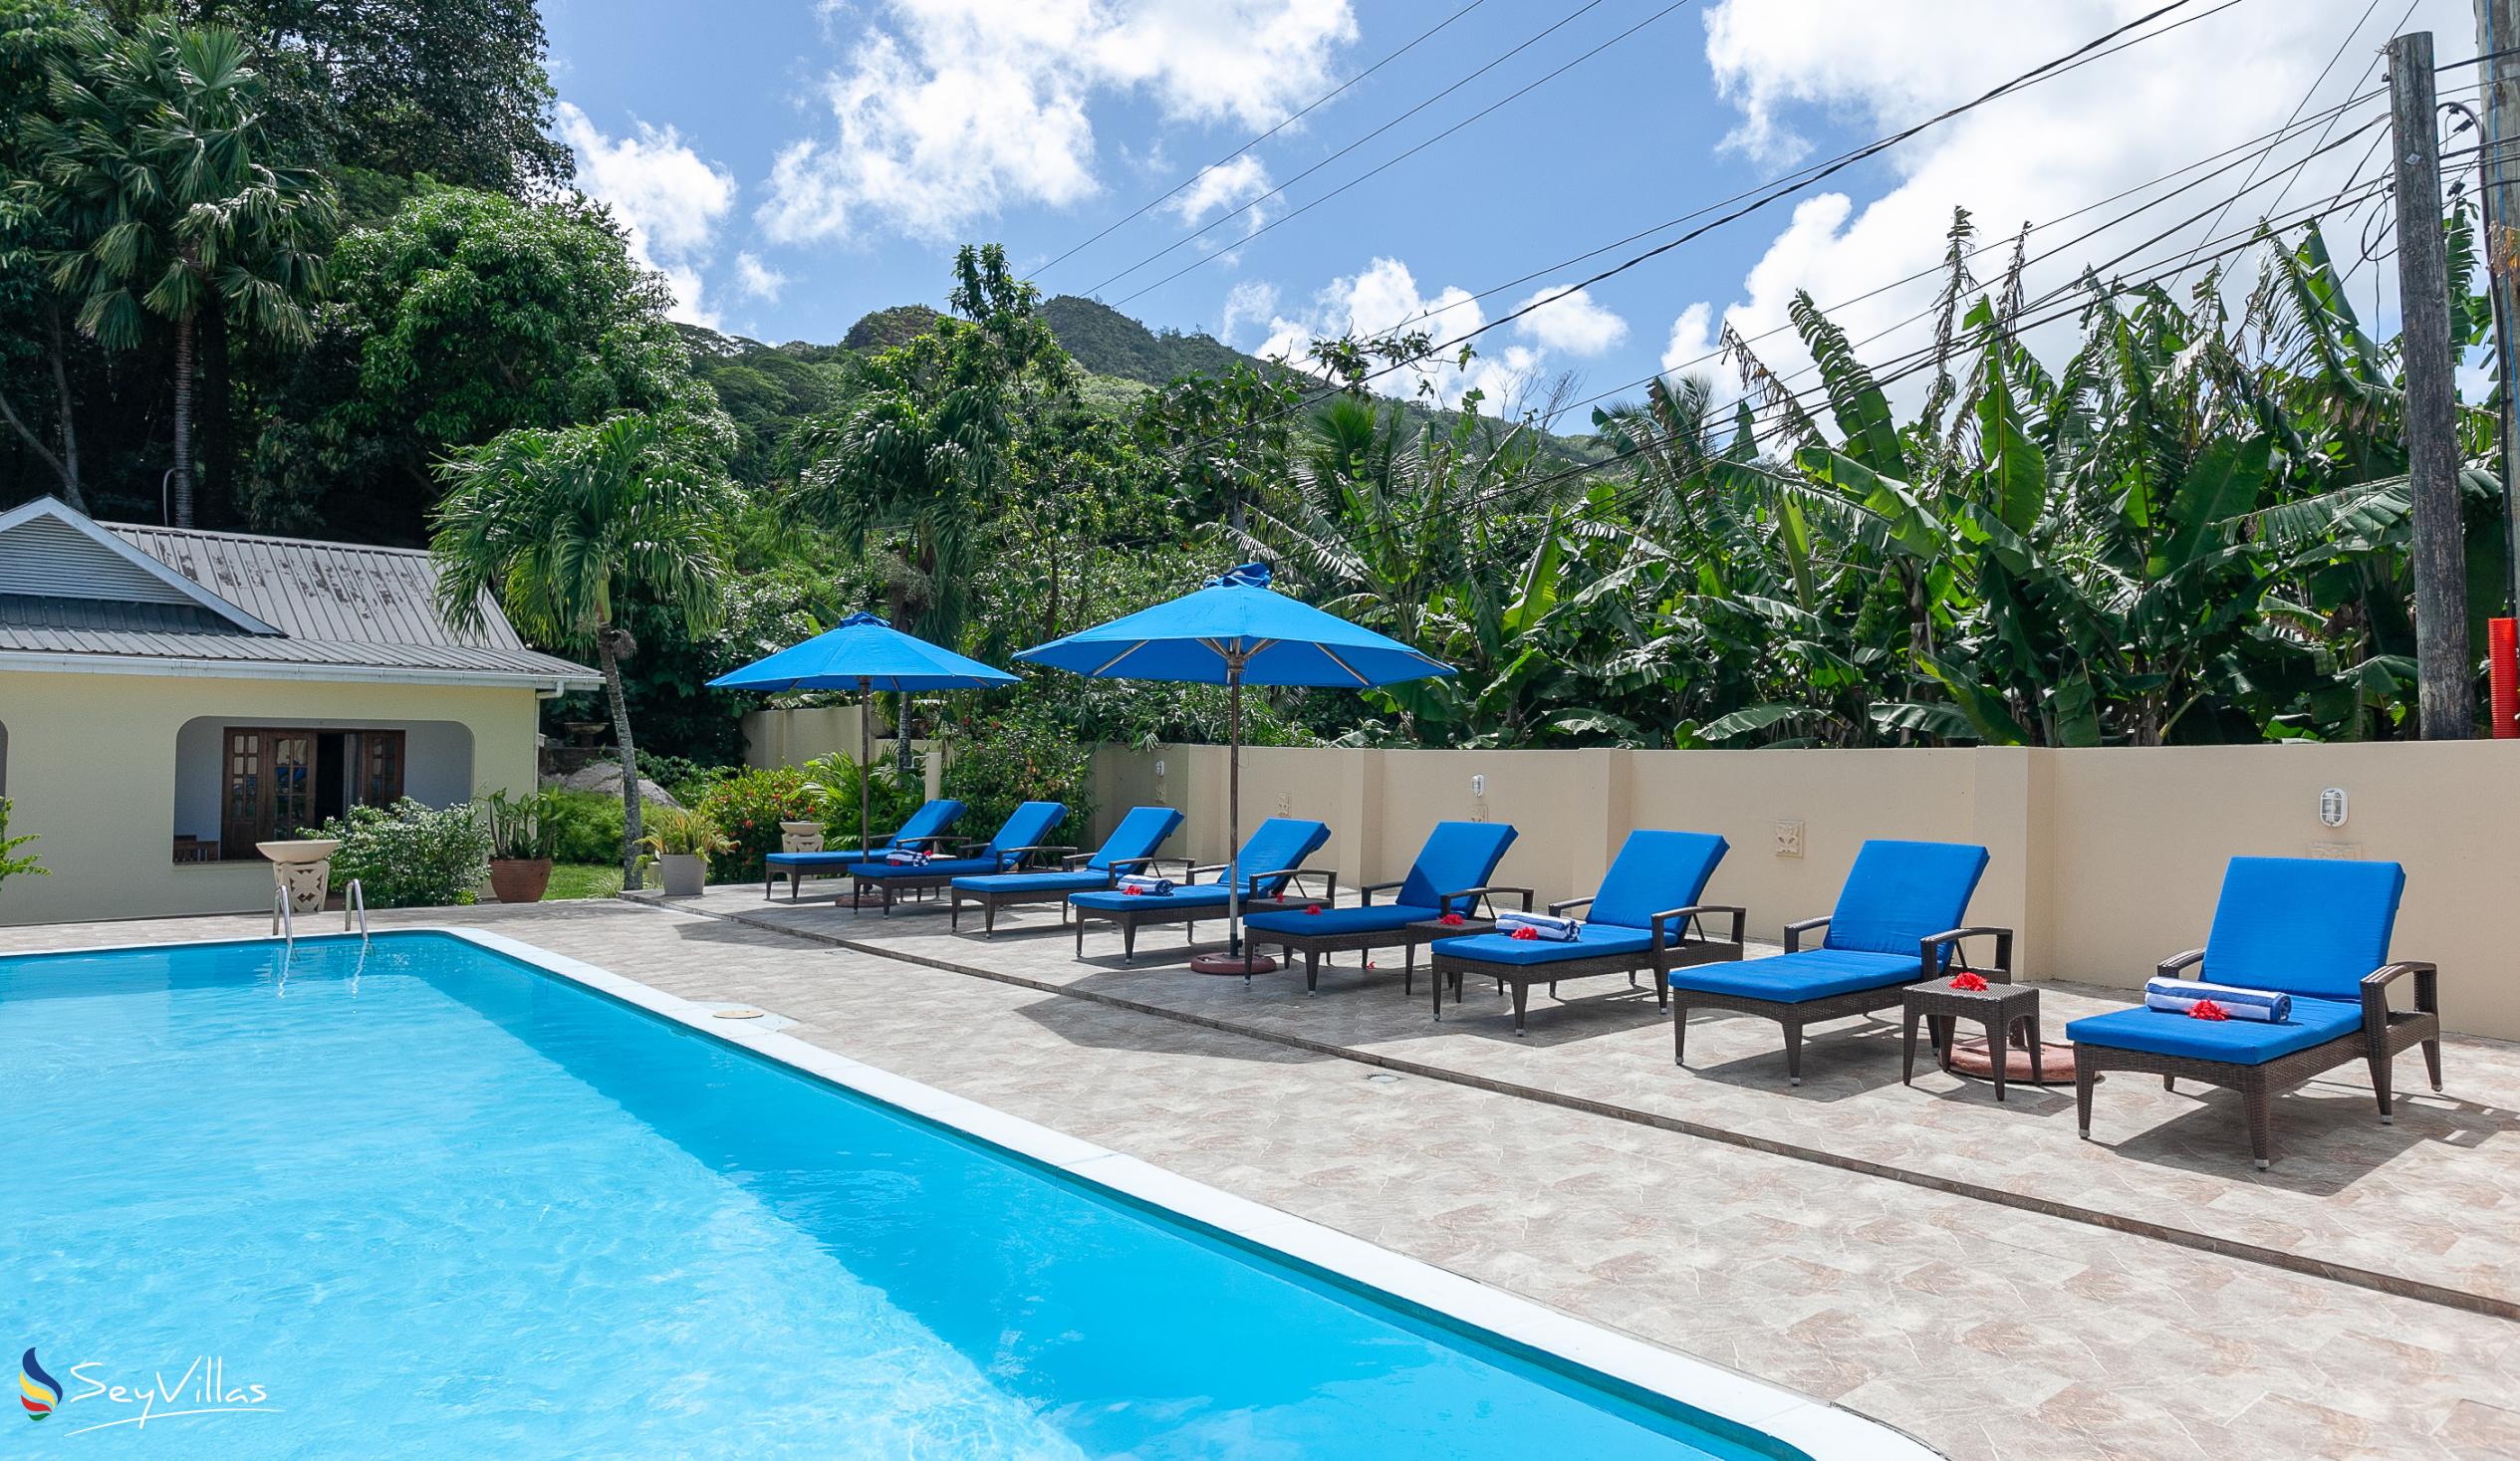 Photo 5: Britannia Hotel - Outdoor area - Praslin (Seychelles)